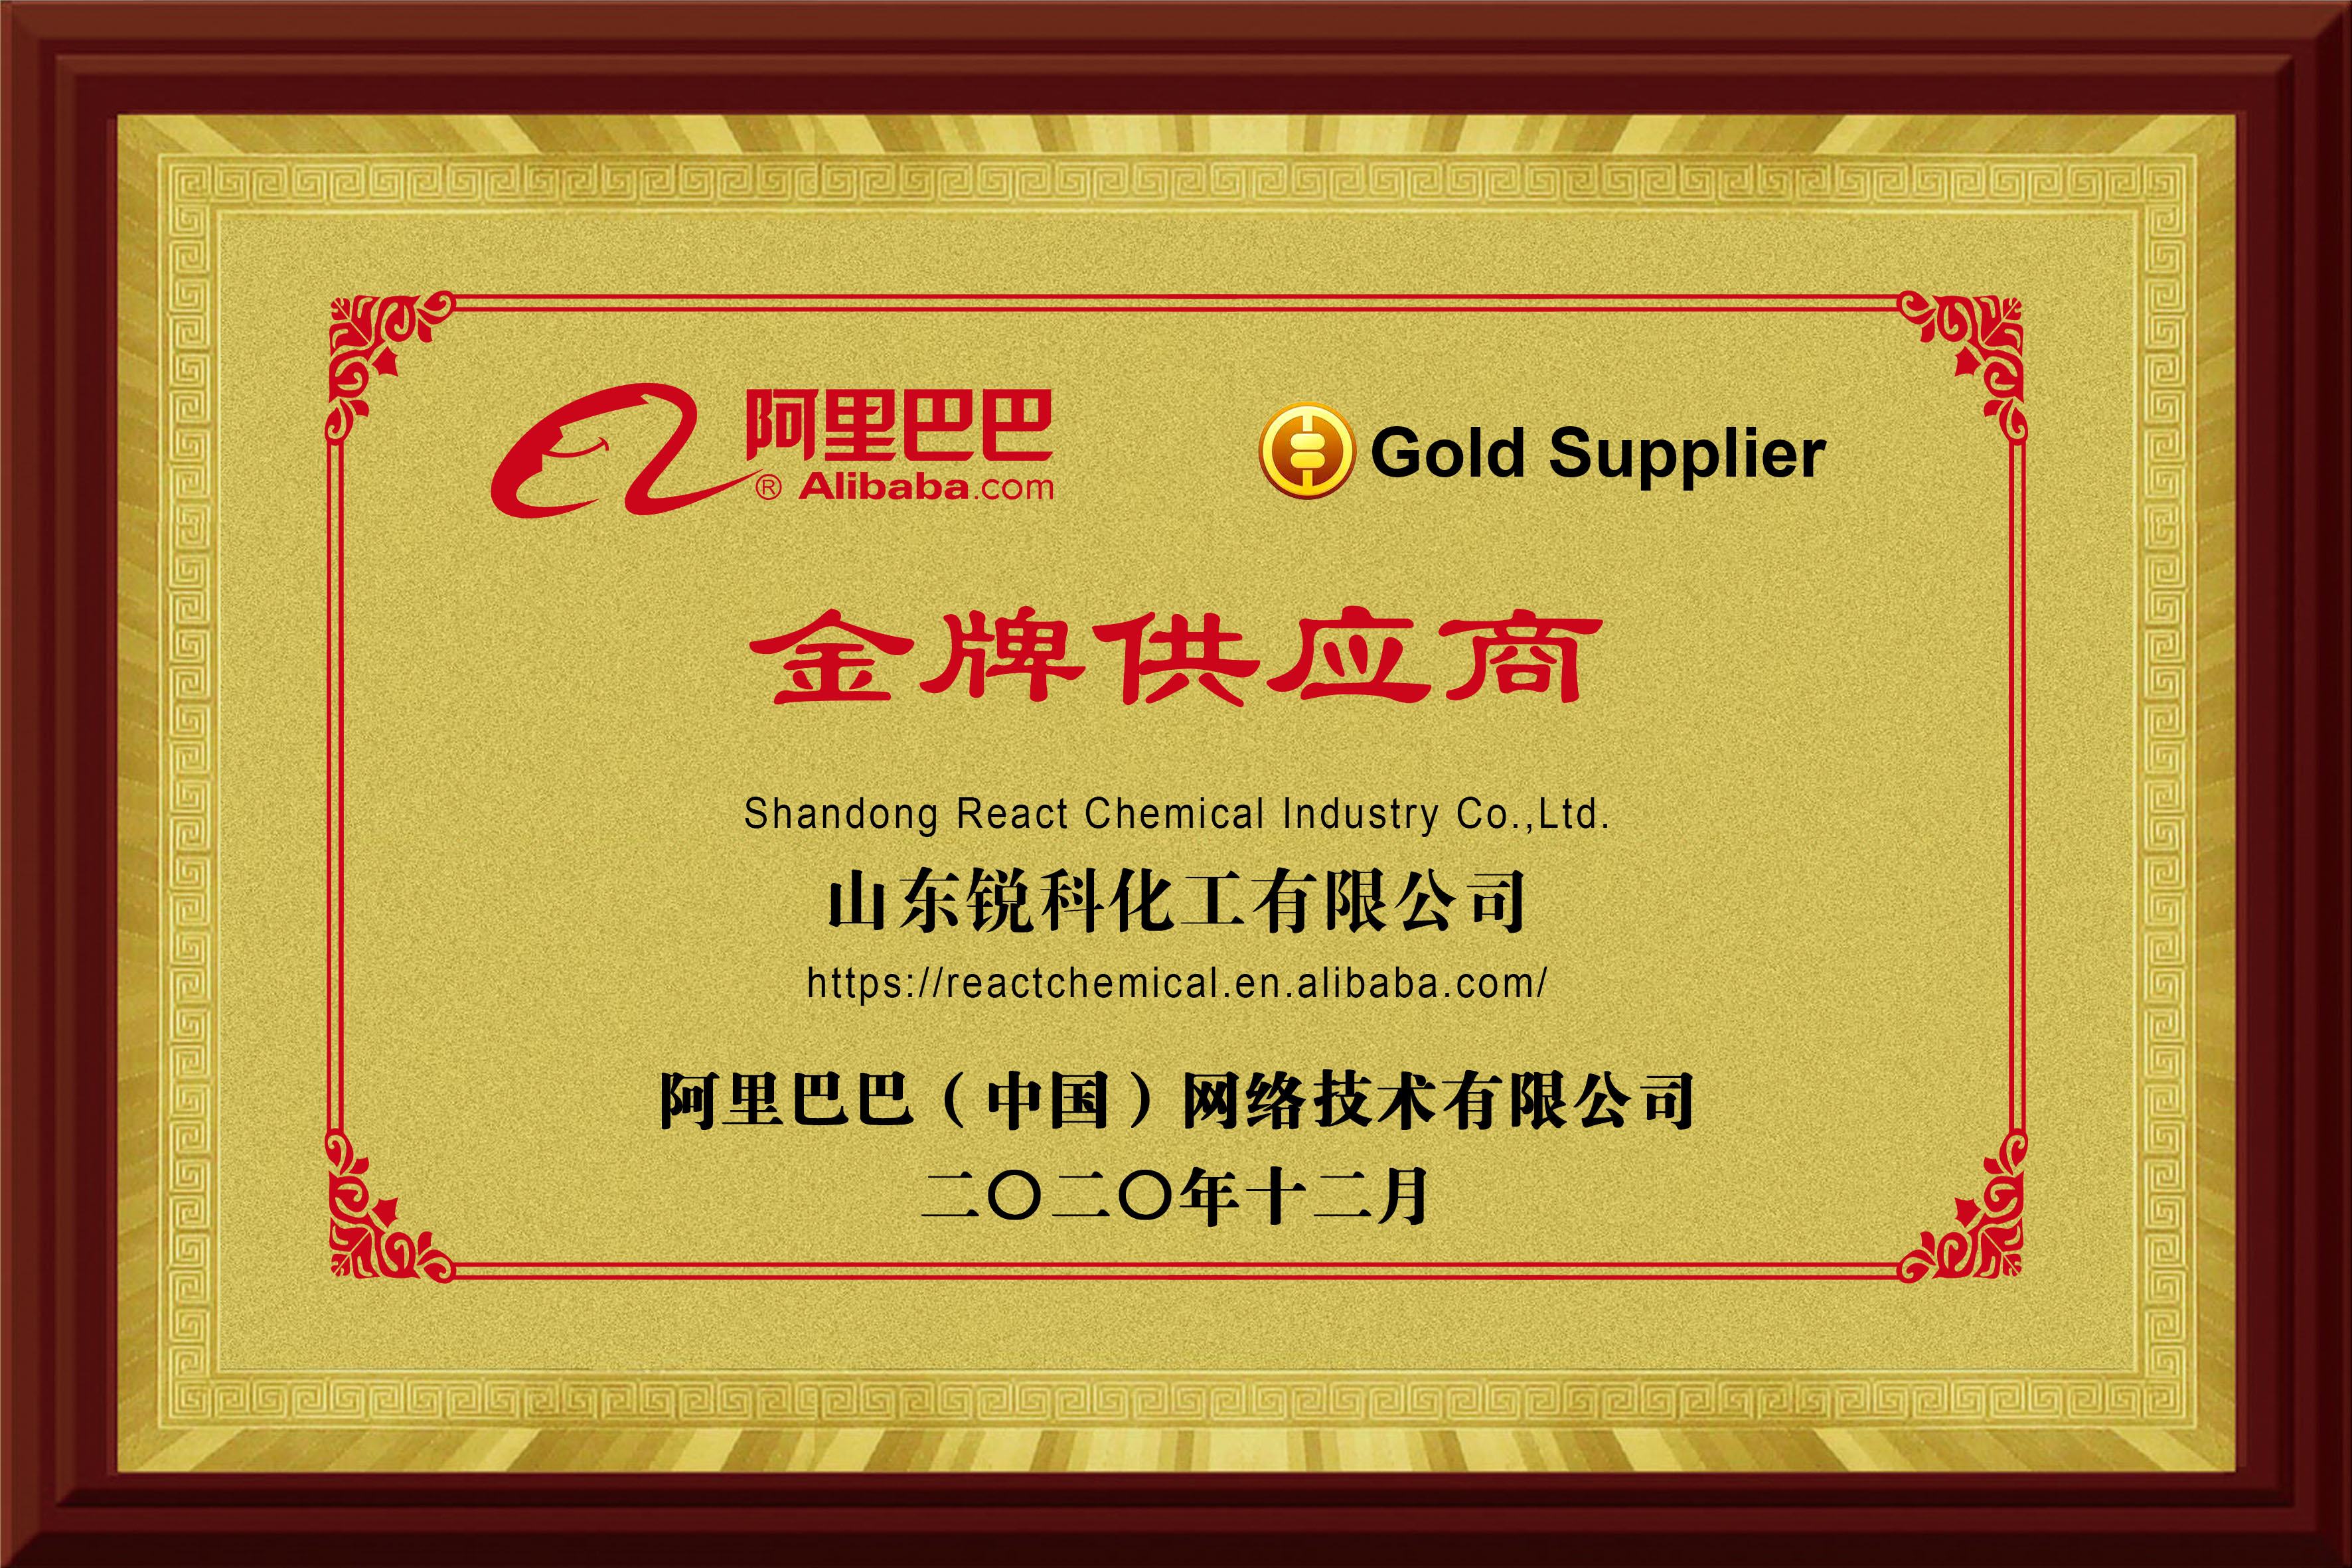 Alibaba Gold Supplier